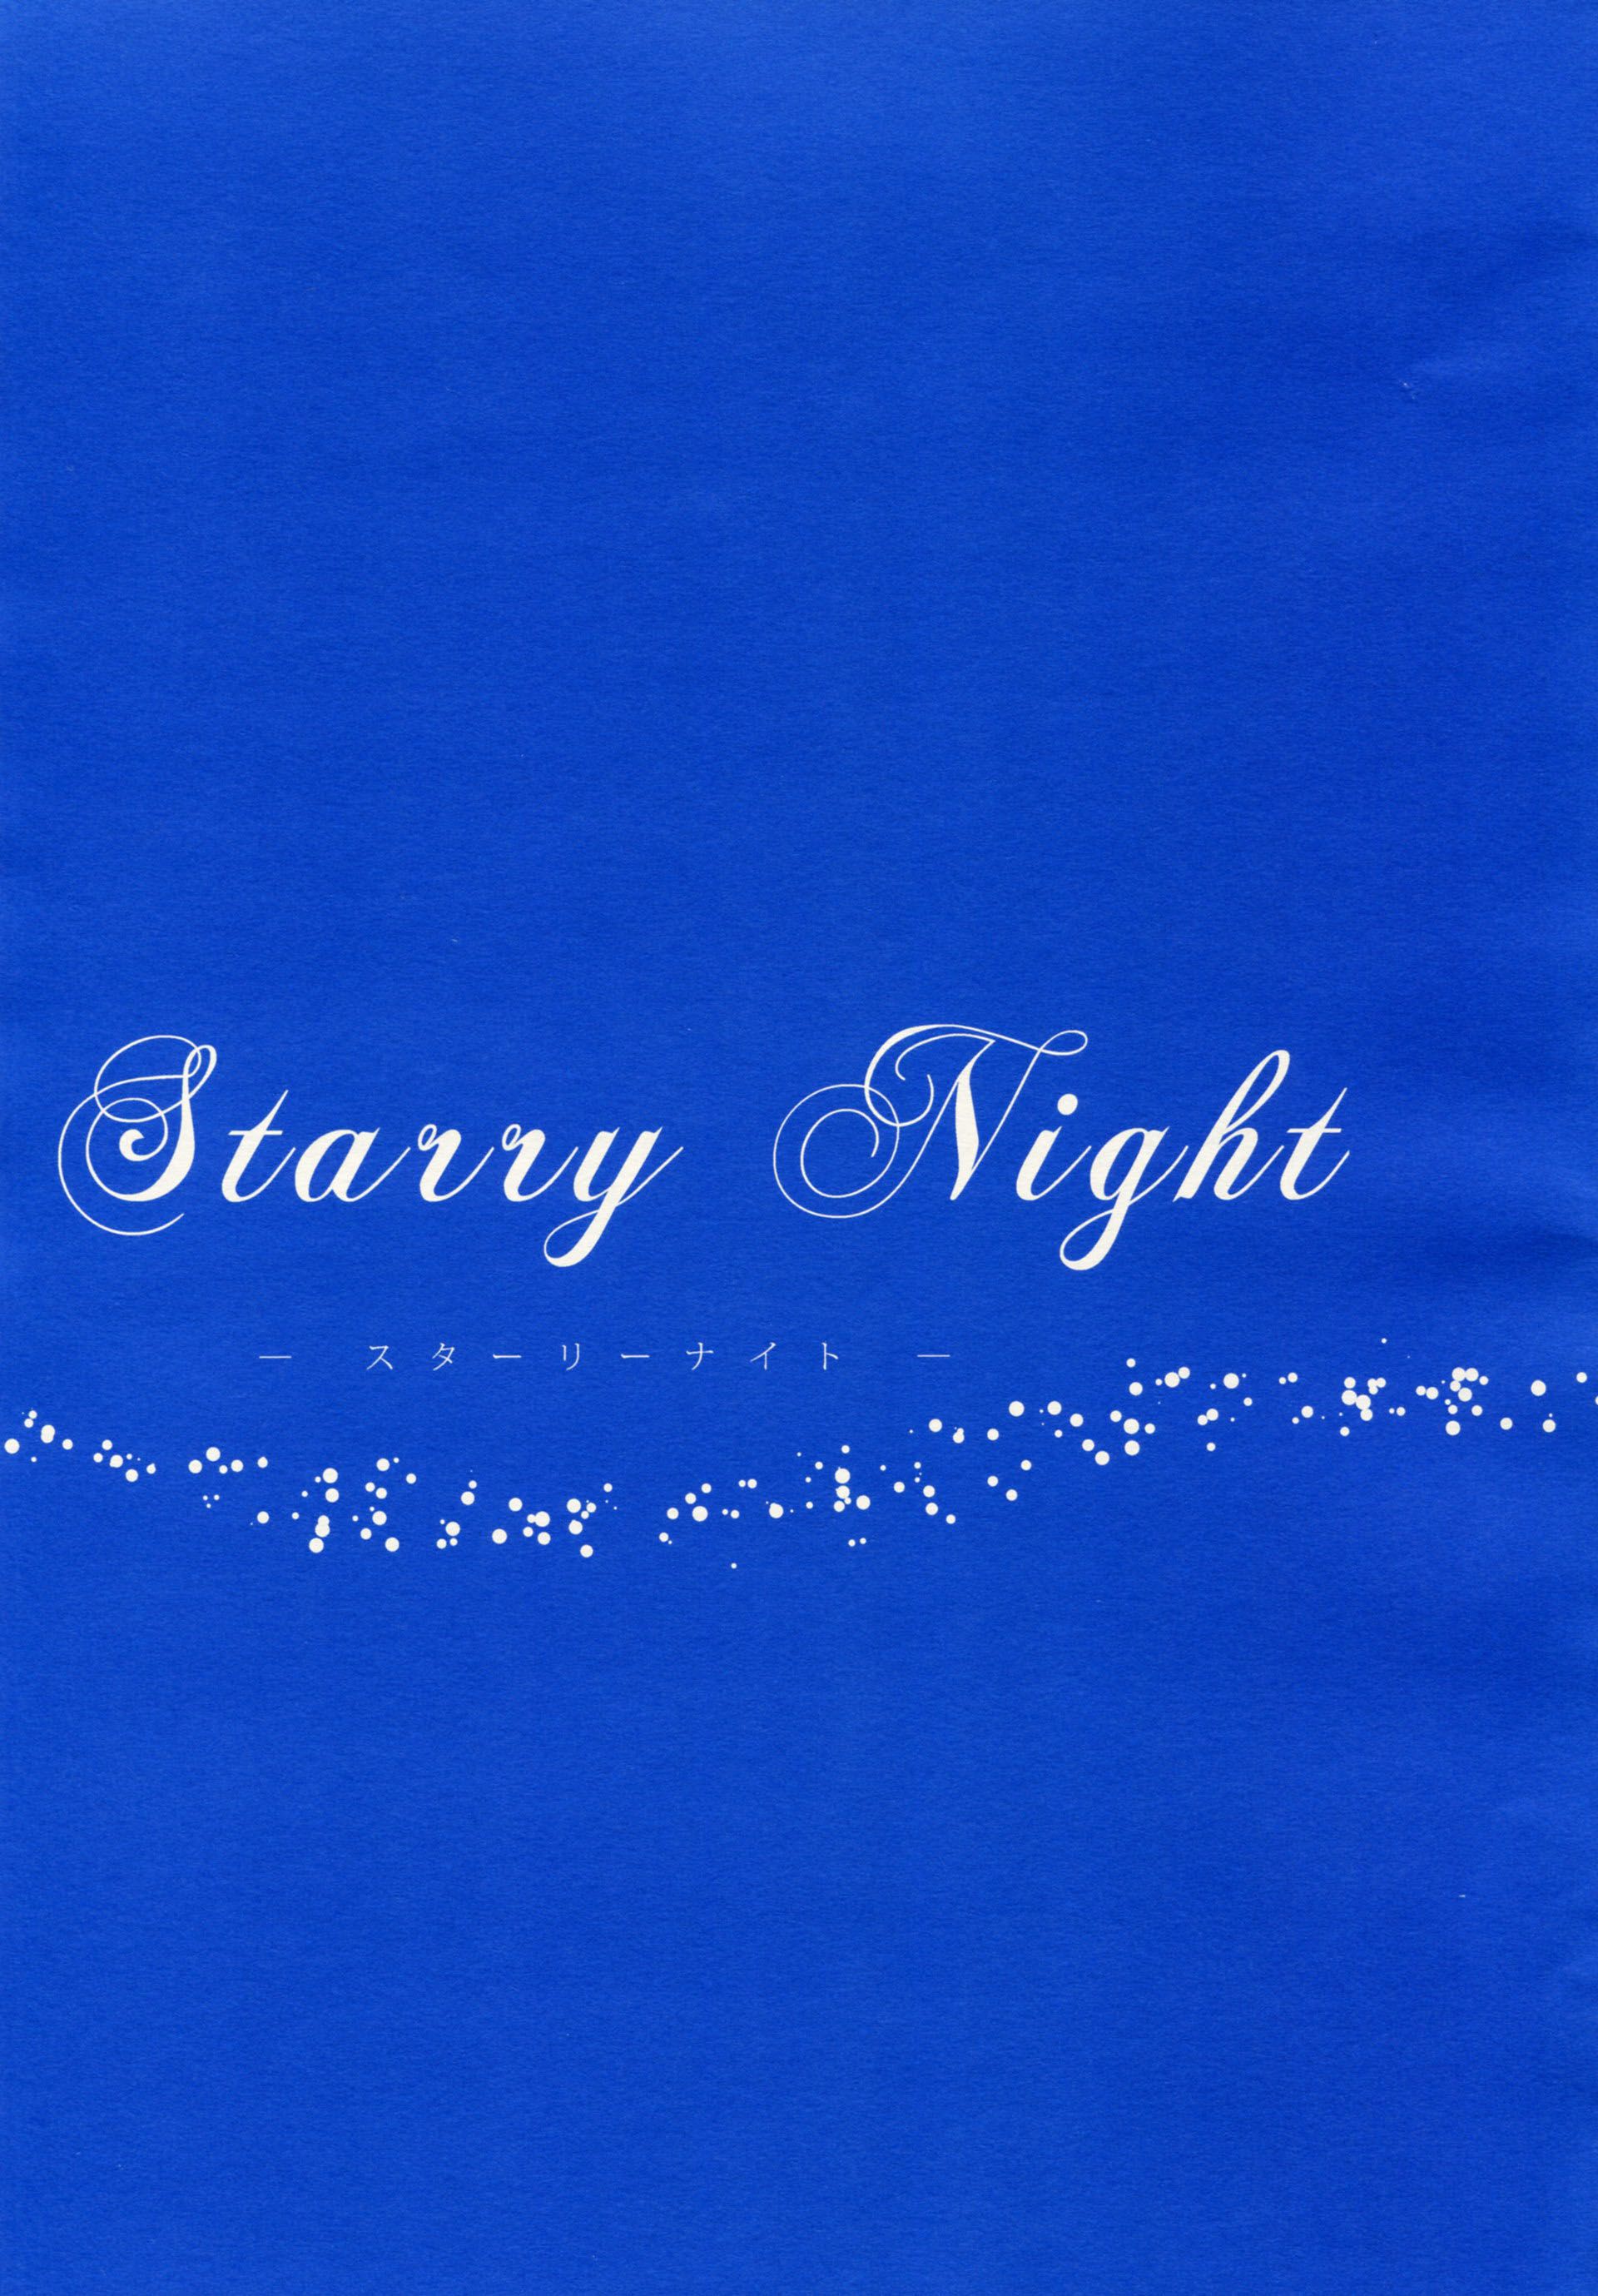 Starry Night - 3